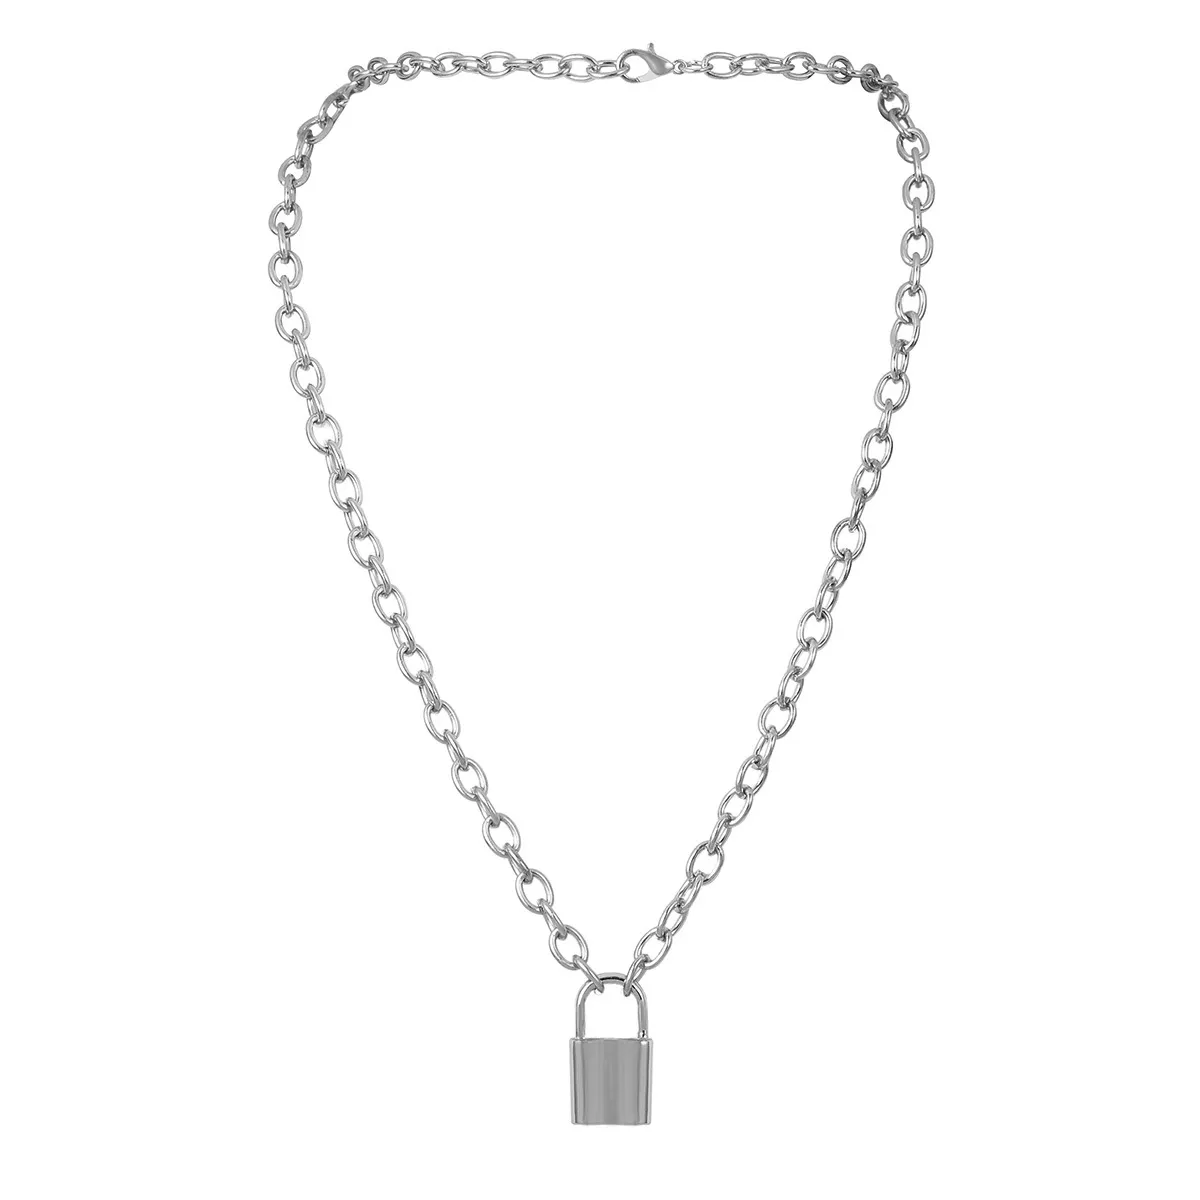 Punk style lock necklace pendant tide men's clothing women's 2021 waterproof stainless steel personality257D